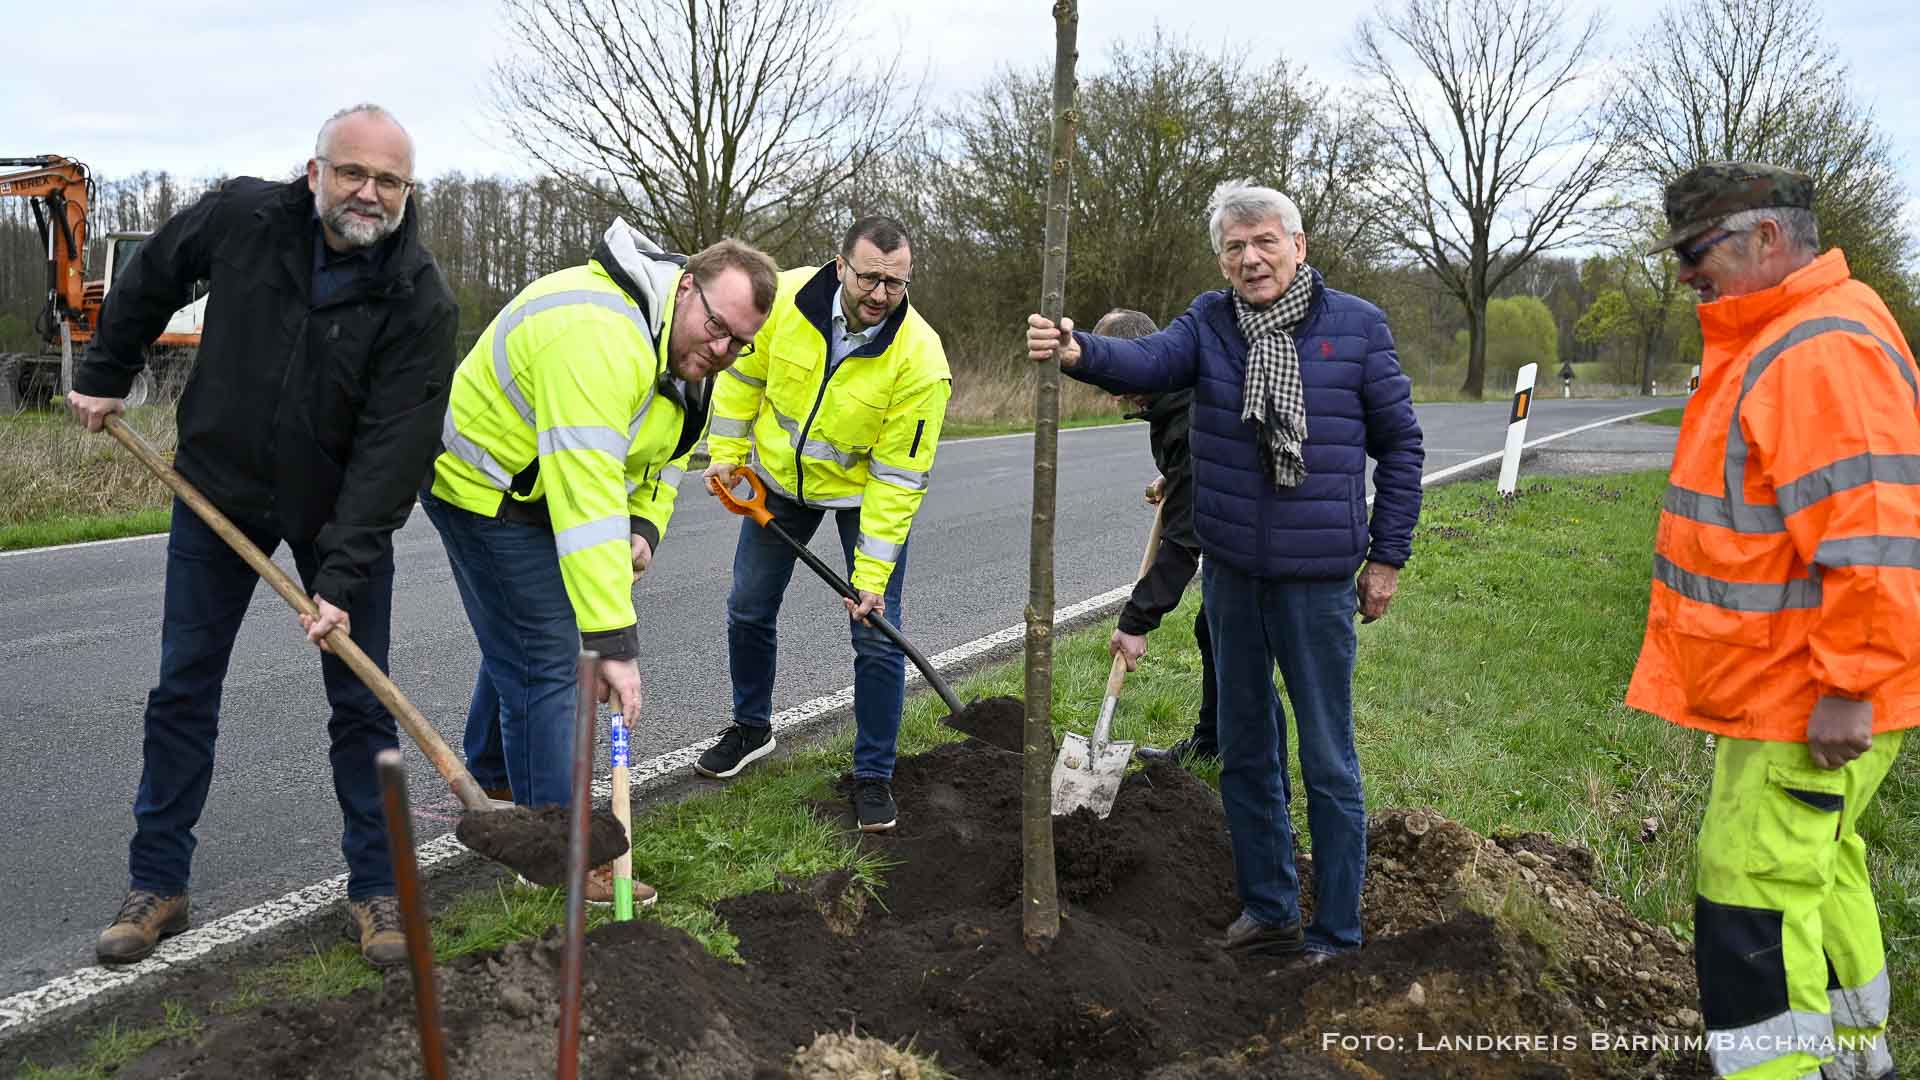 Landkreis Barnim pflanzt knapp 100 neue Allee-Bäume